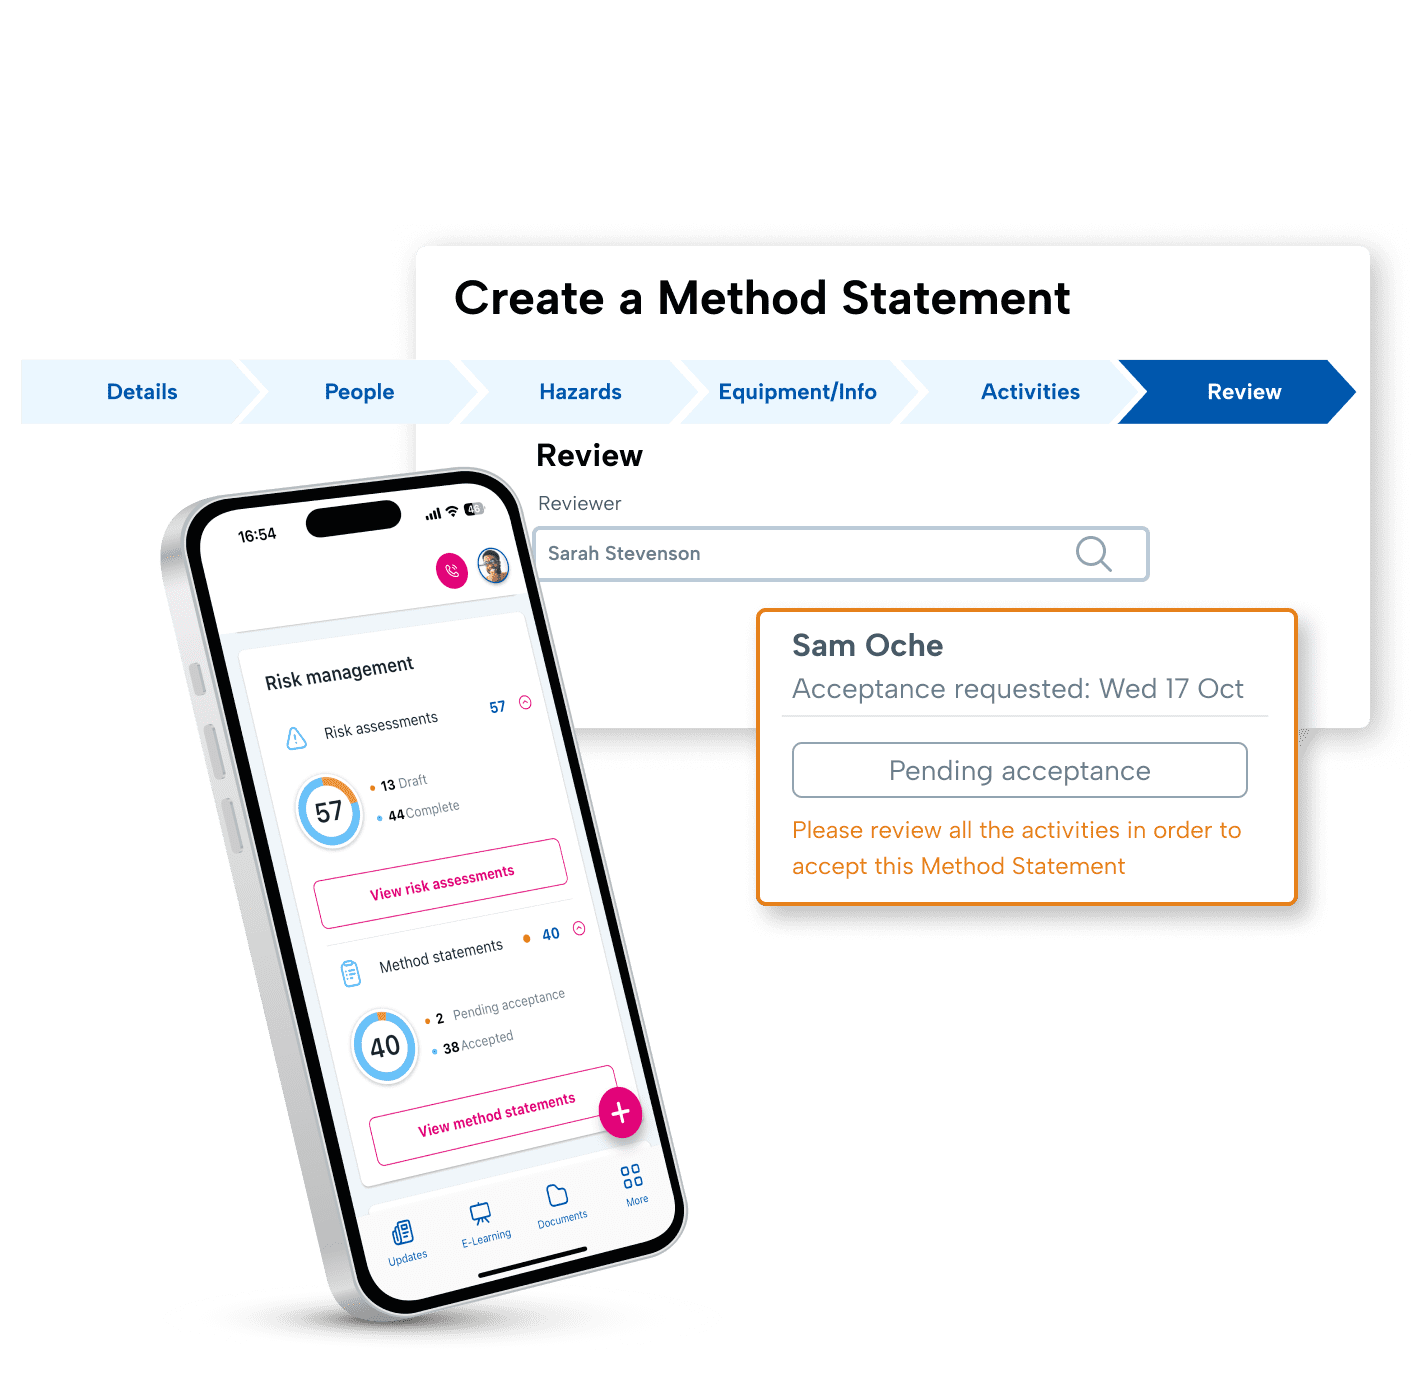 Creating Method Statements